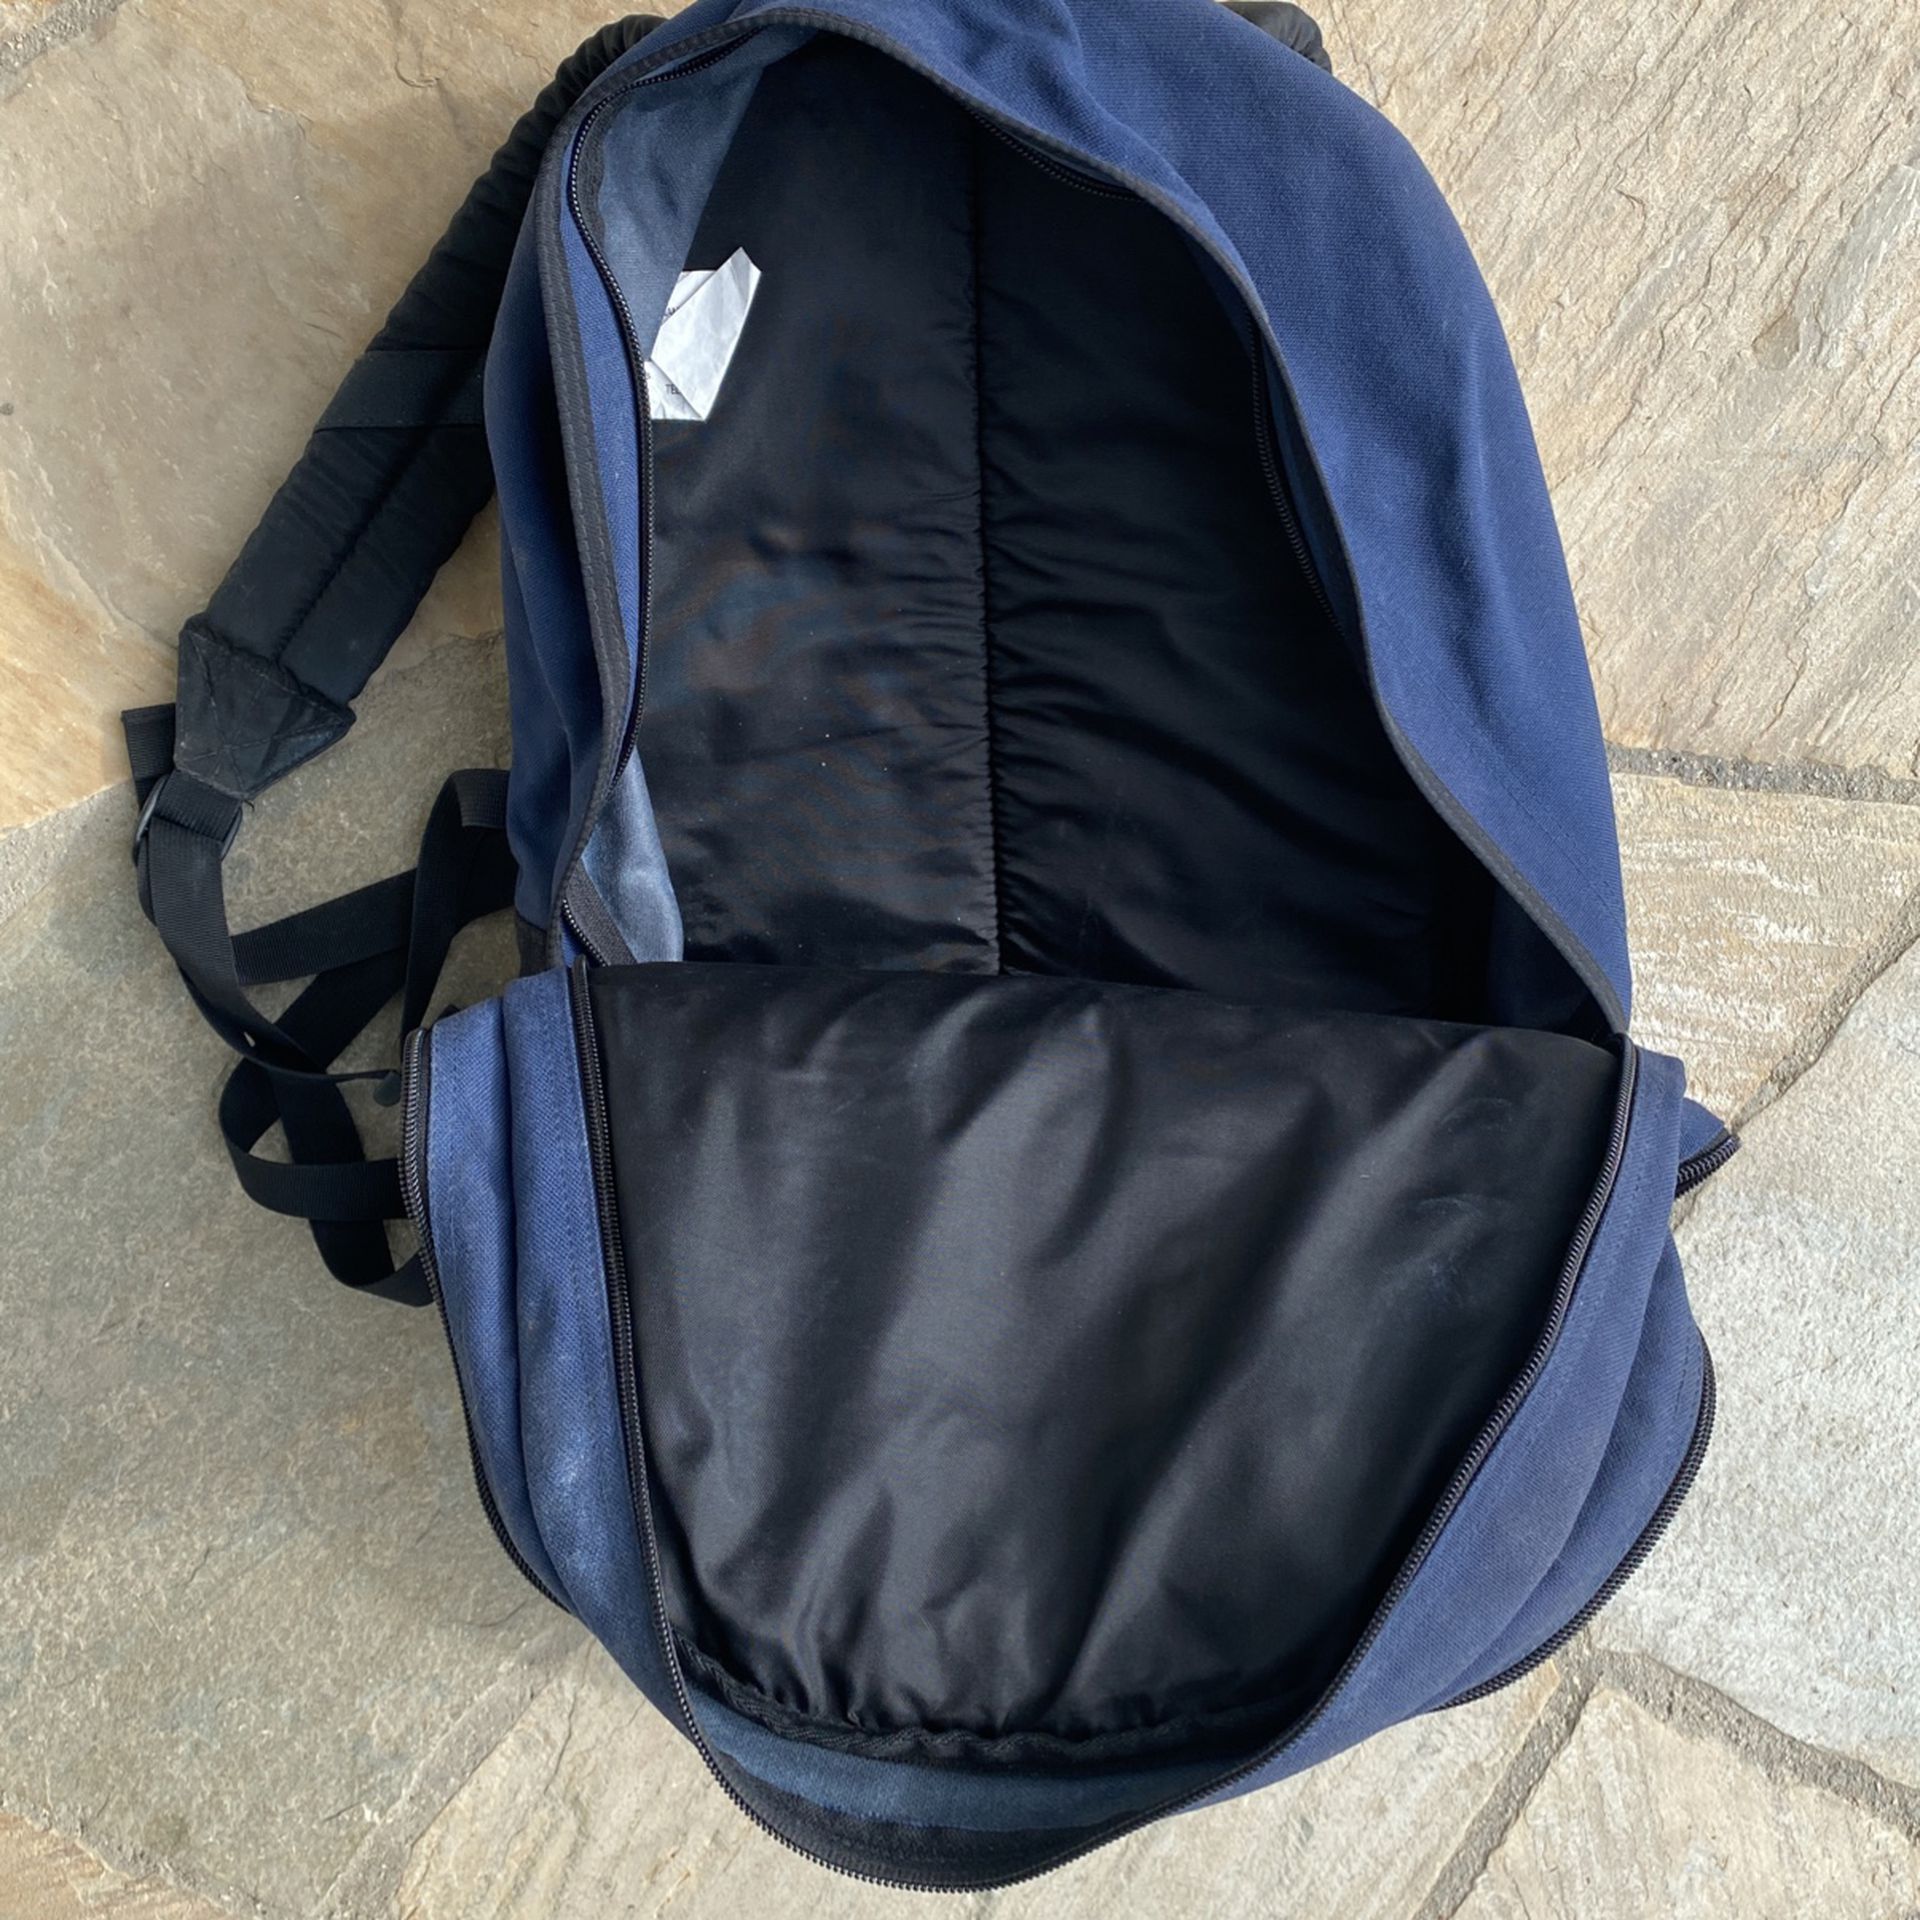 Backpack - school or hiking